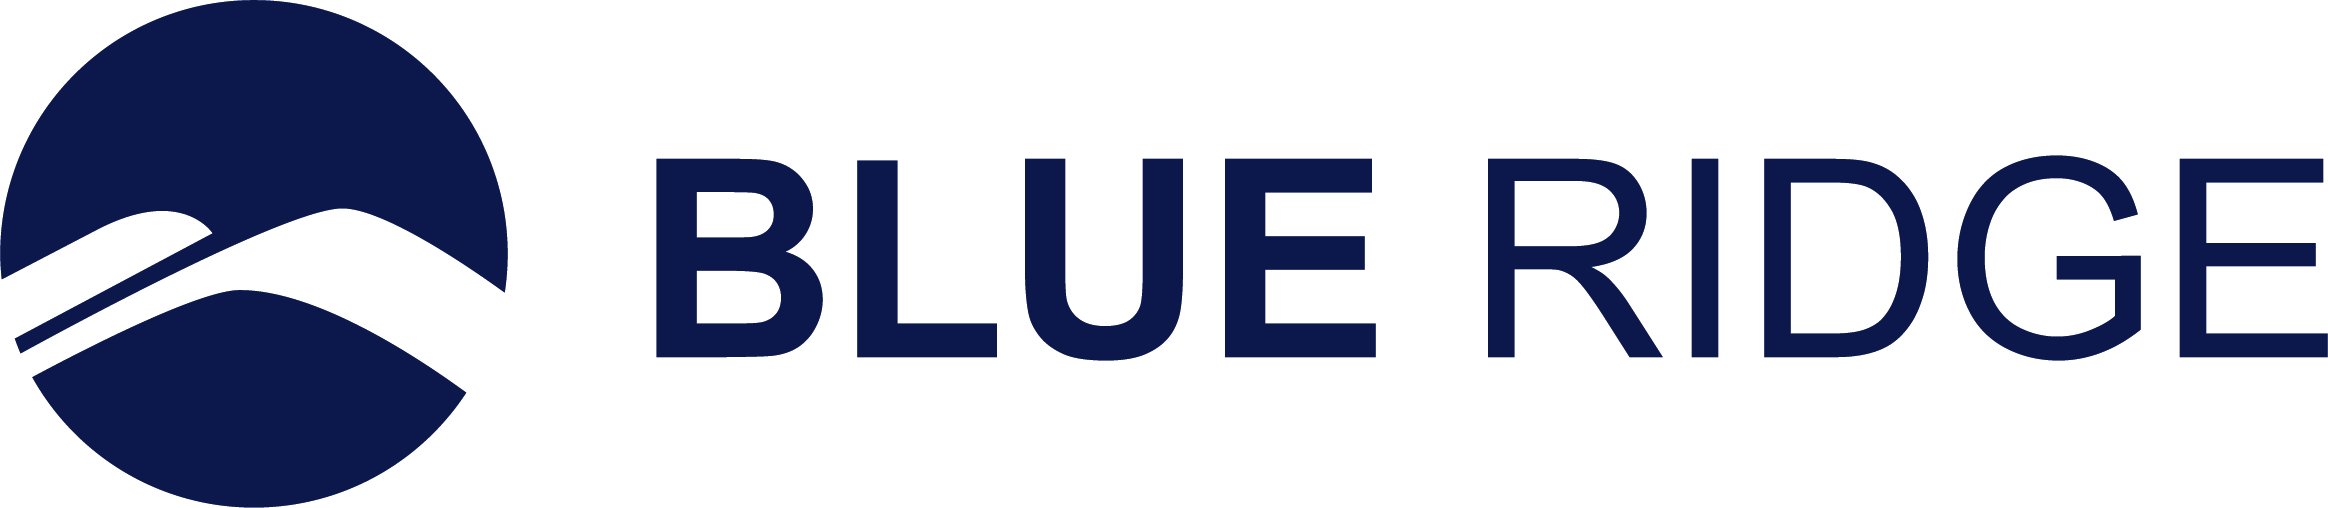 Blue Ridge Talks Supply Chain for Manufacturing Tomorrow